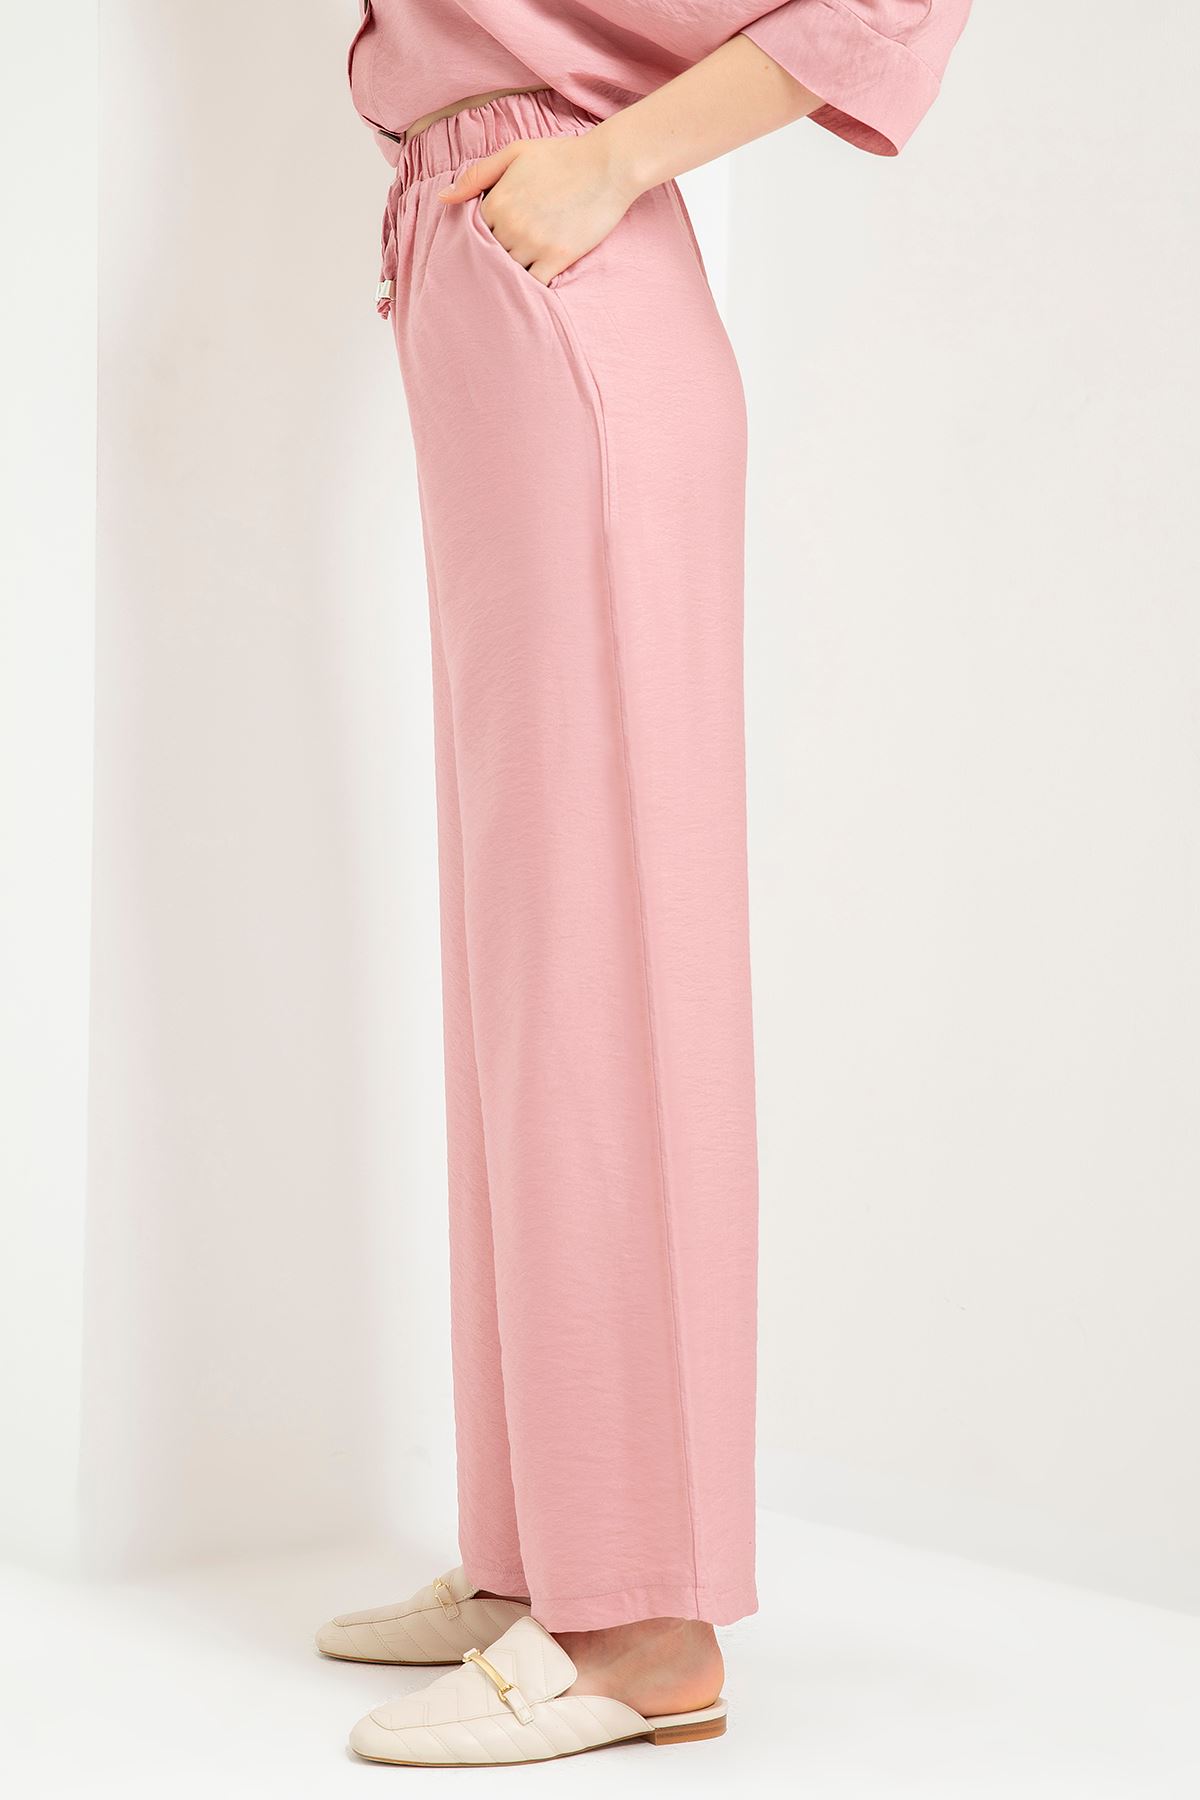 Aerobin Fabric Long Wide Elastic Waist Women'S Trouser - Rose 